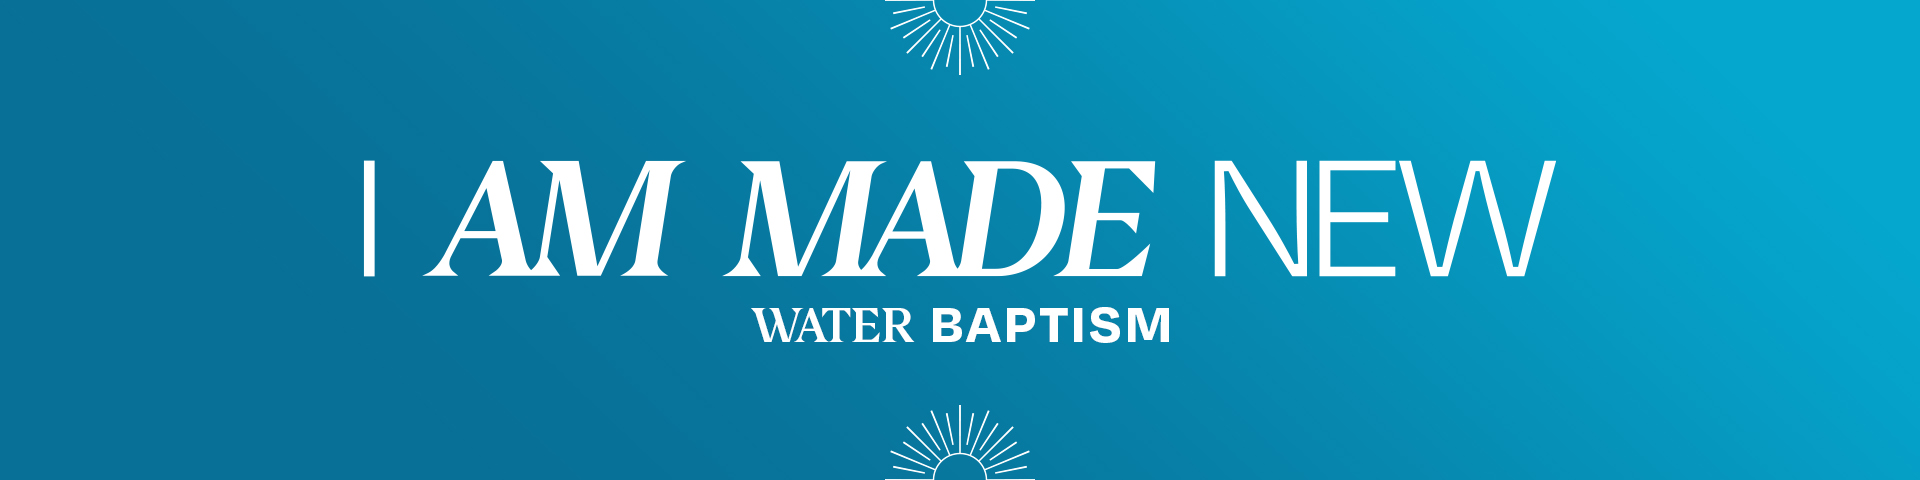 Water_Baptism_Event_Banner.jpg